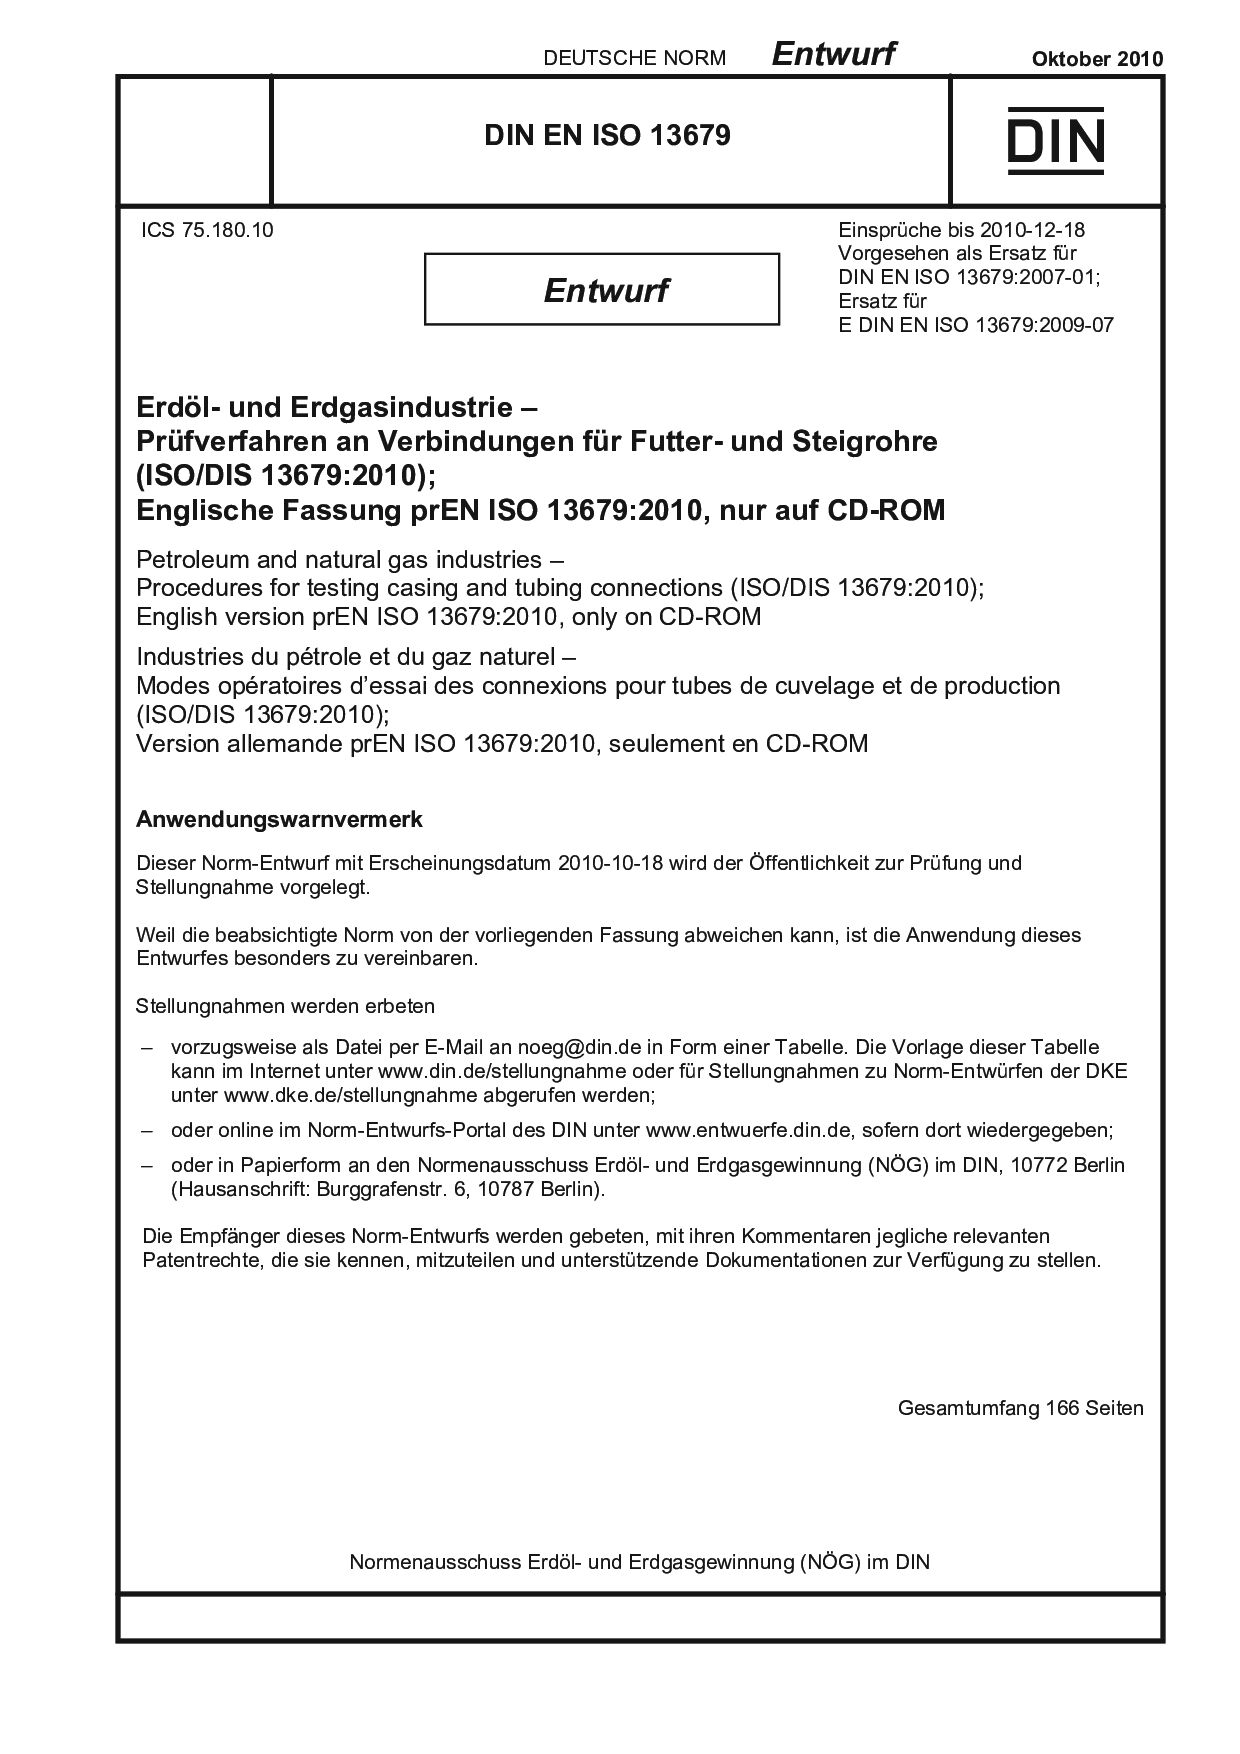 DIN EN ISO 13679 E:2010-10